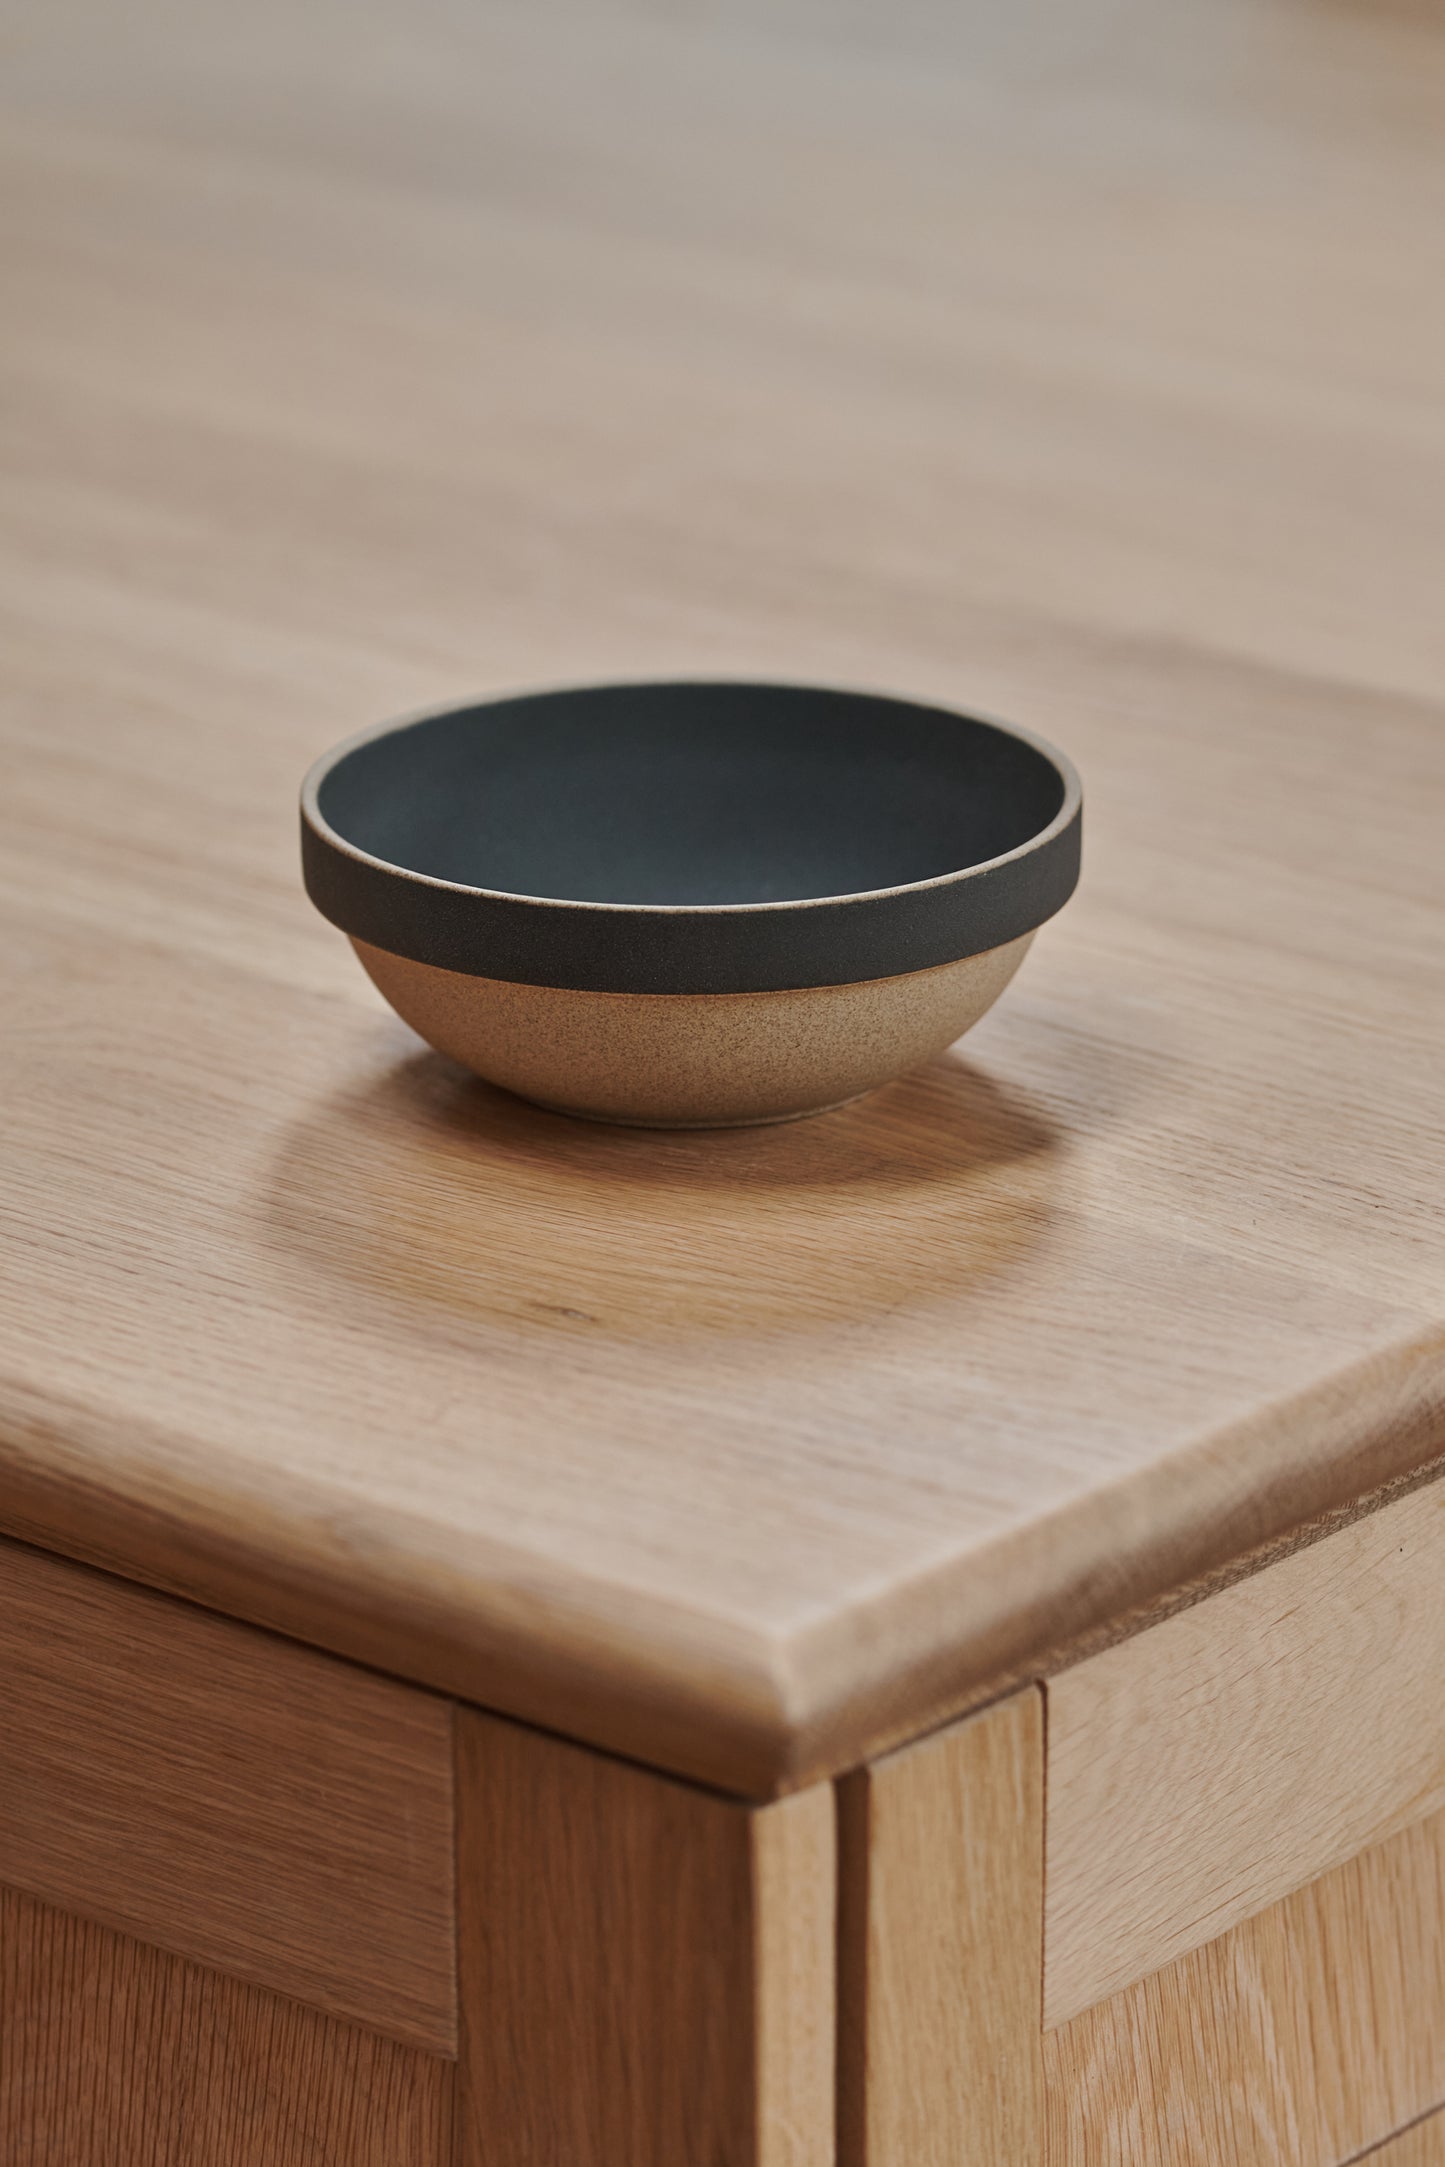 Enter_The_Loft_Hasami_Porcelain_Ceramic_Japanese_Stack_Bowl_Plate_Black_Clay